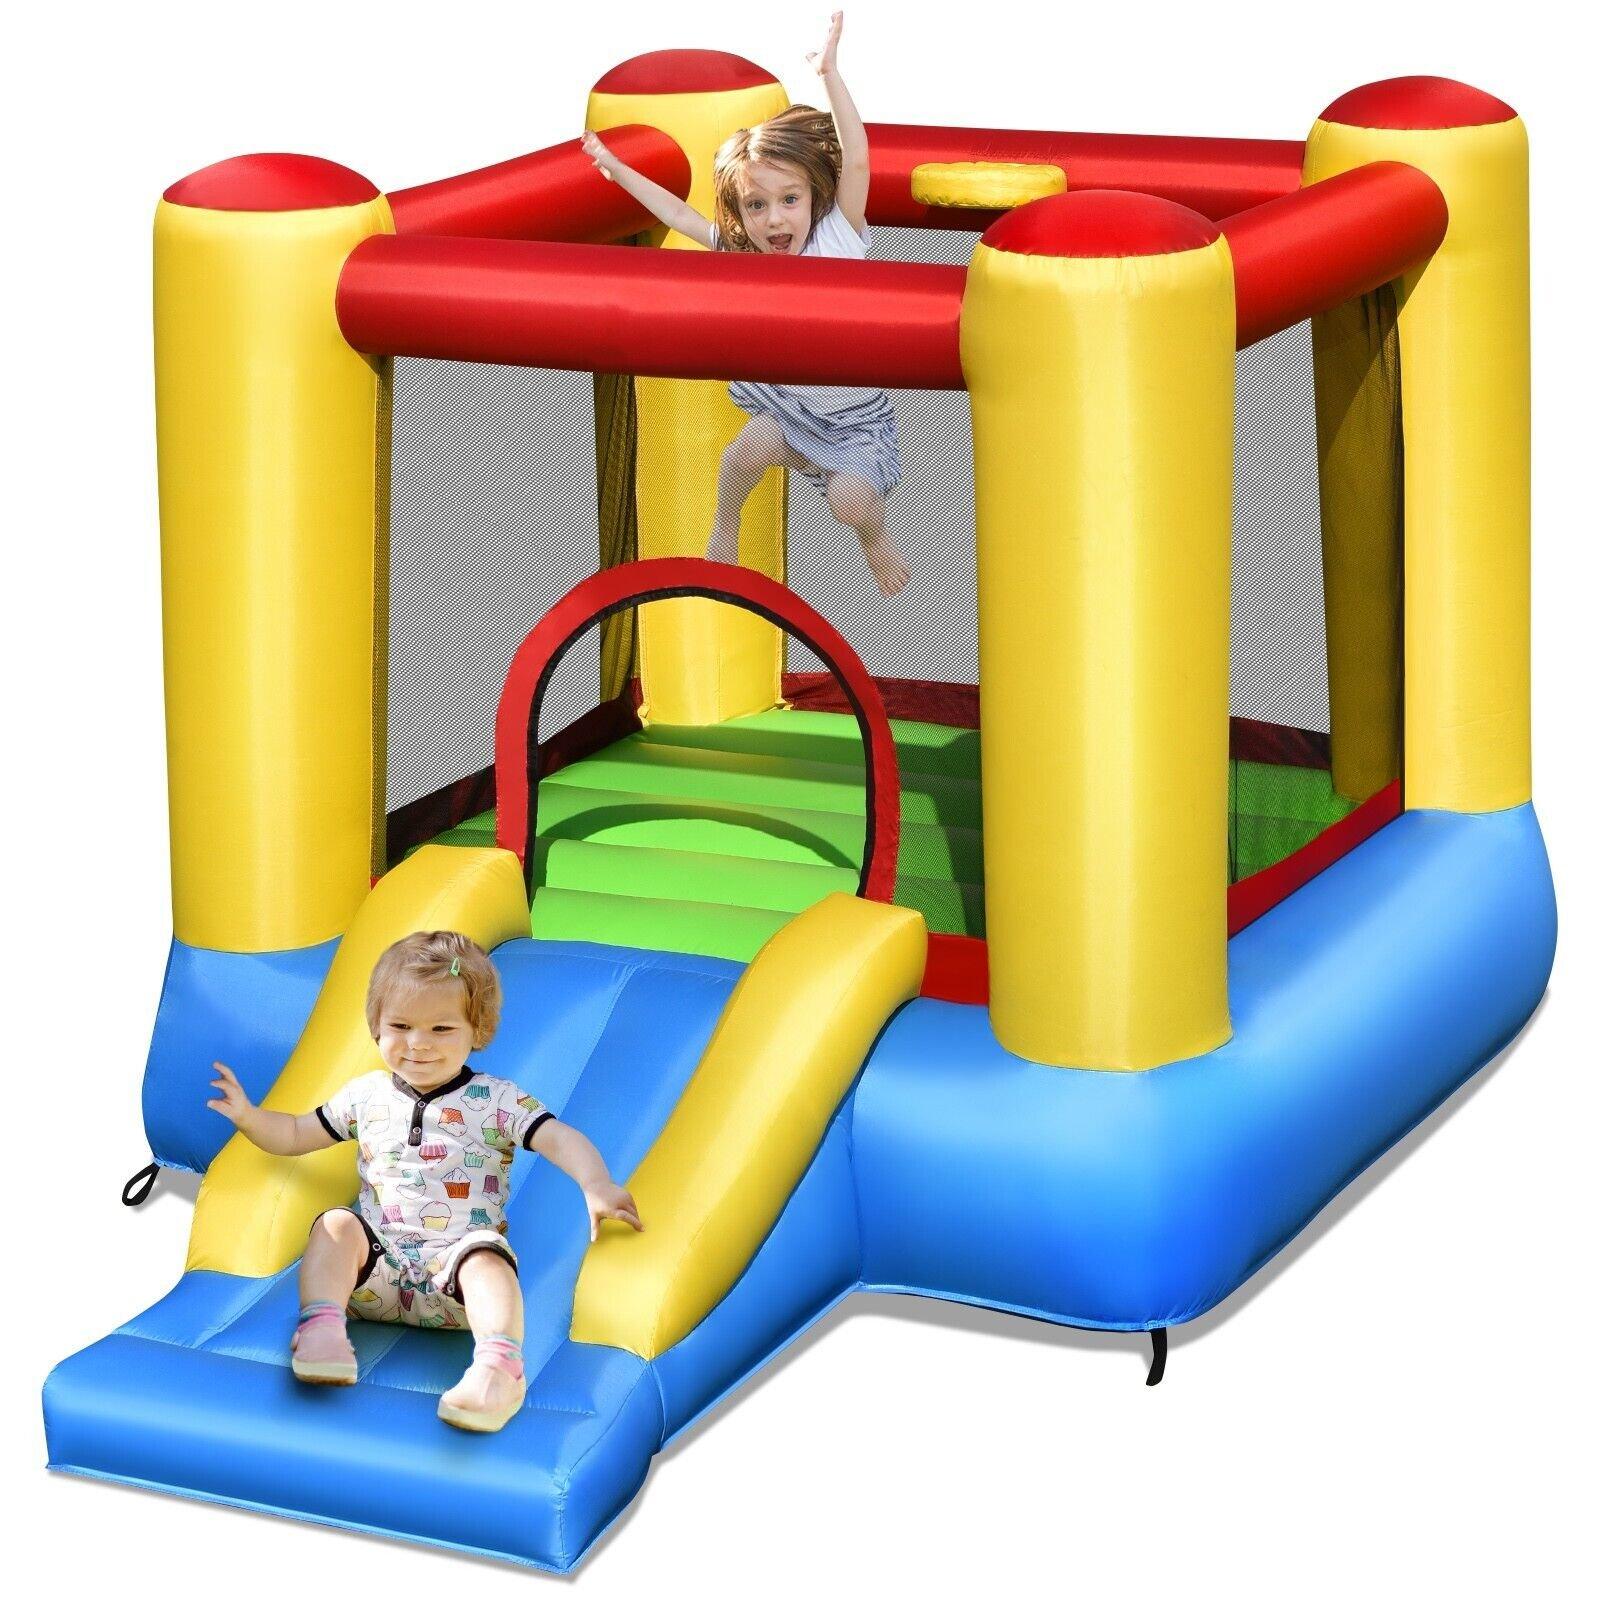 Kids Bouncy House Inflatable Jumping Castle Playhouse w/ Slide & Basketball Hoop